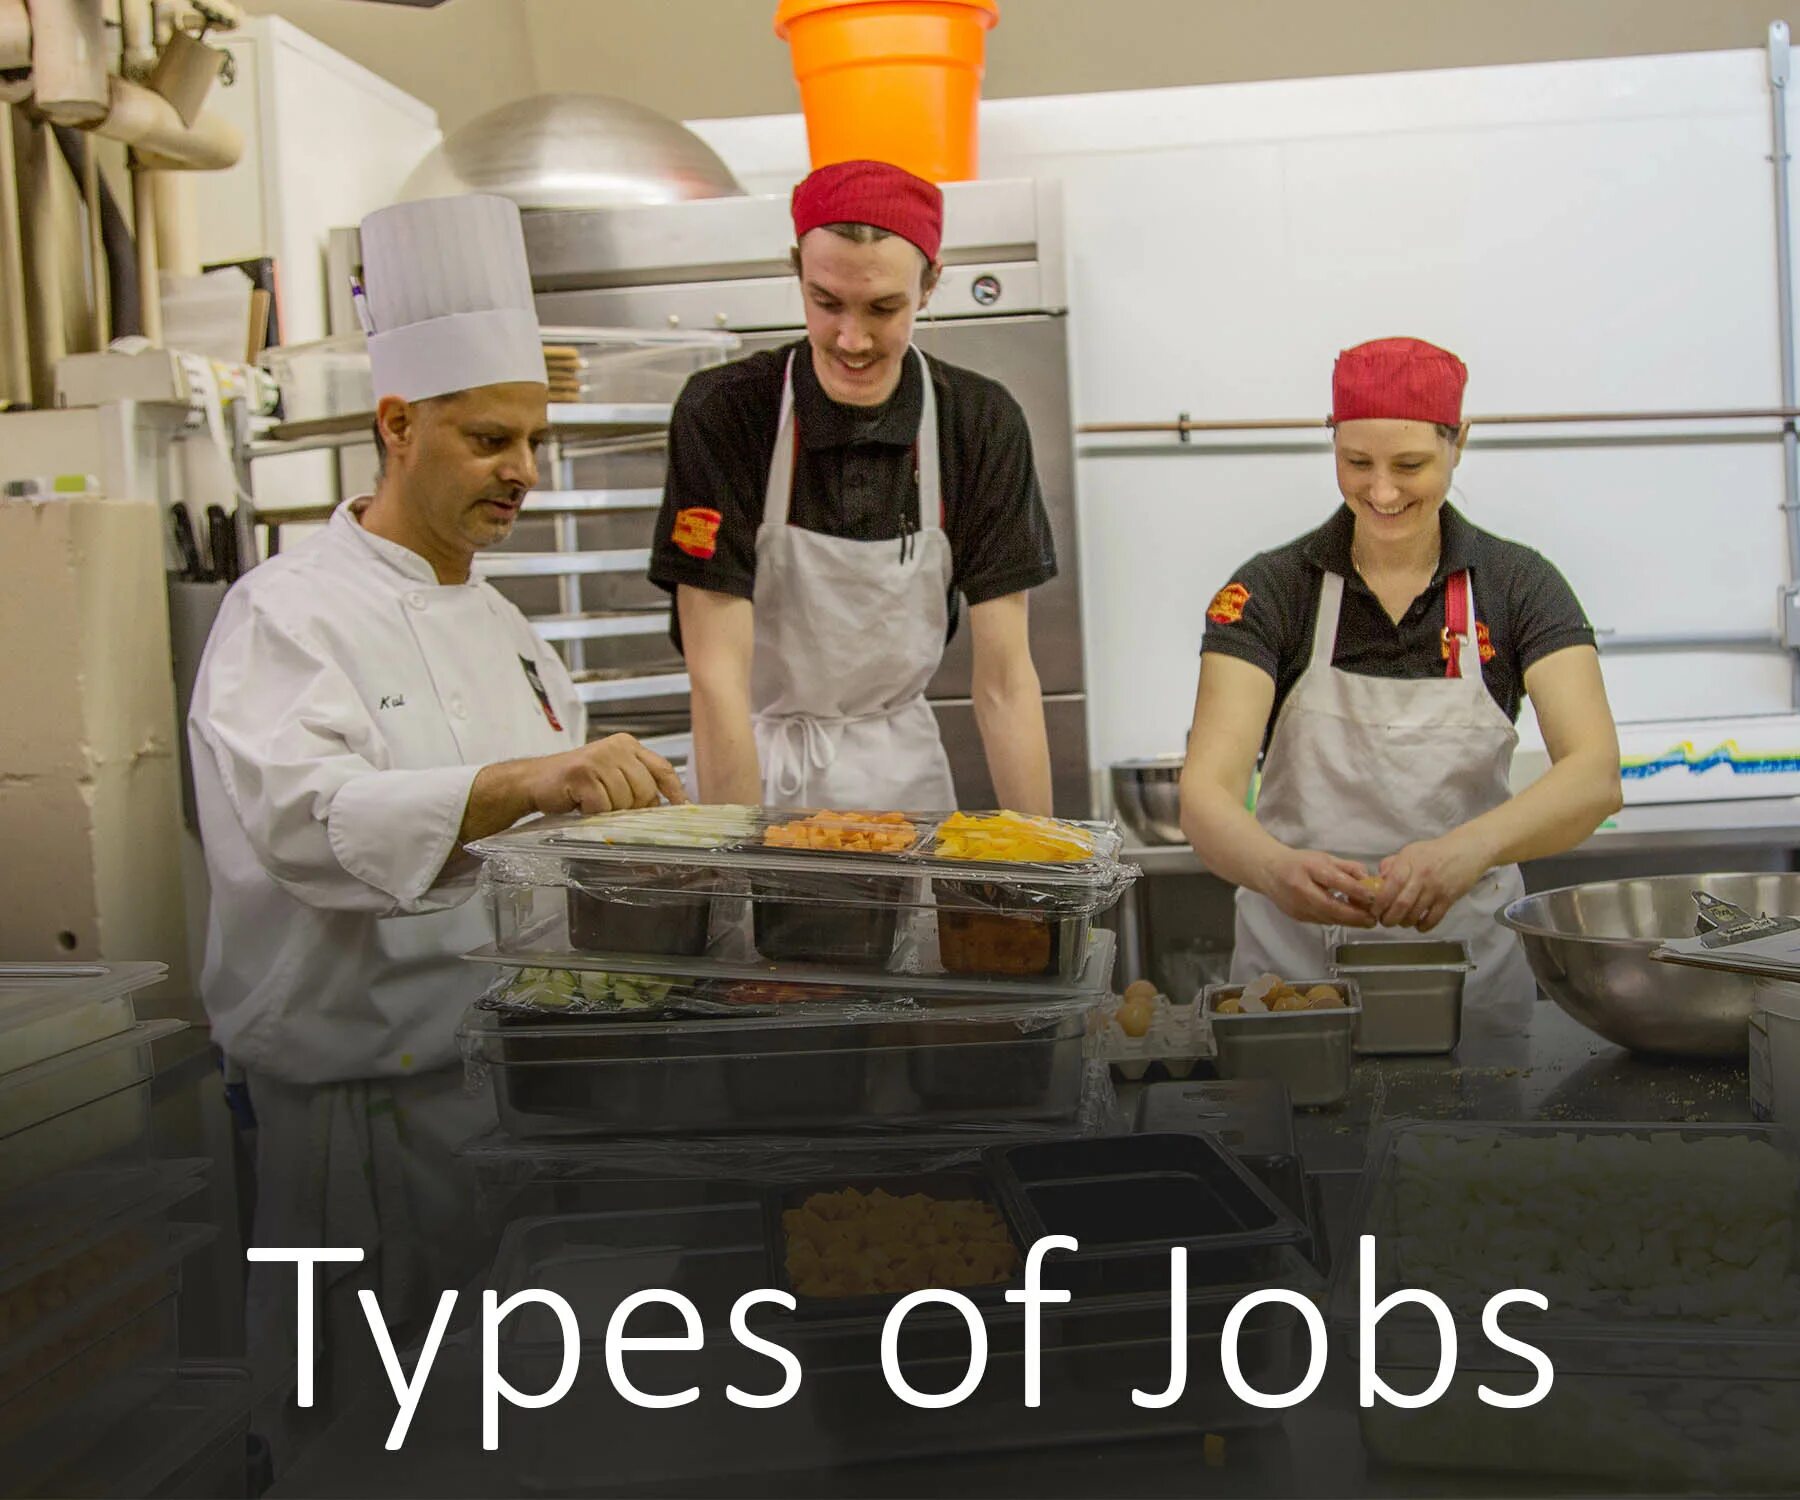 List of jobs. Types of jobs. Картинки Types of jobs. World of jobs. Types of jobs презентация.